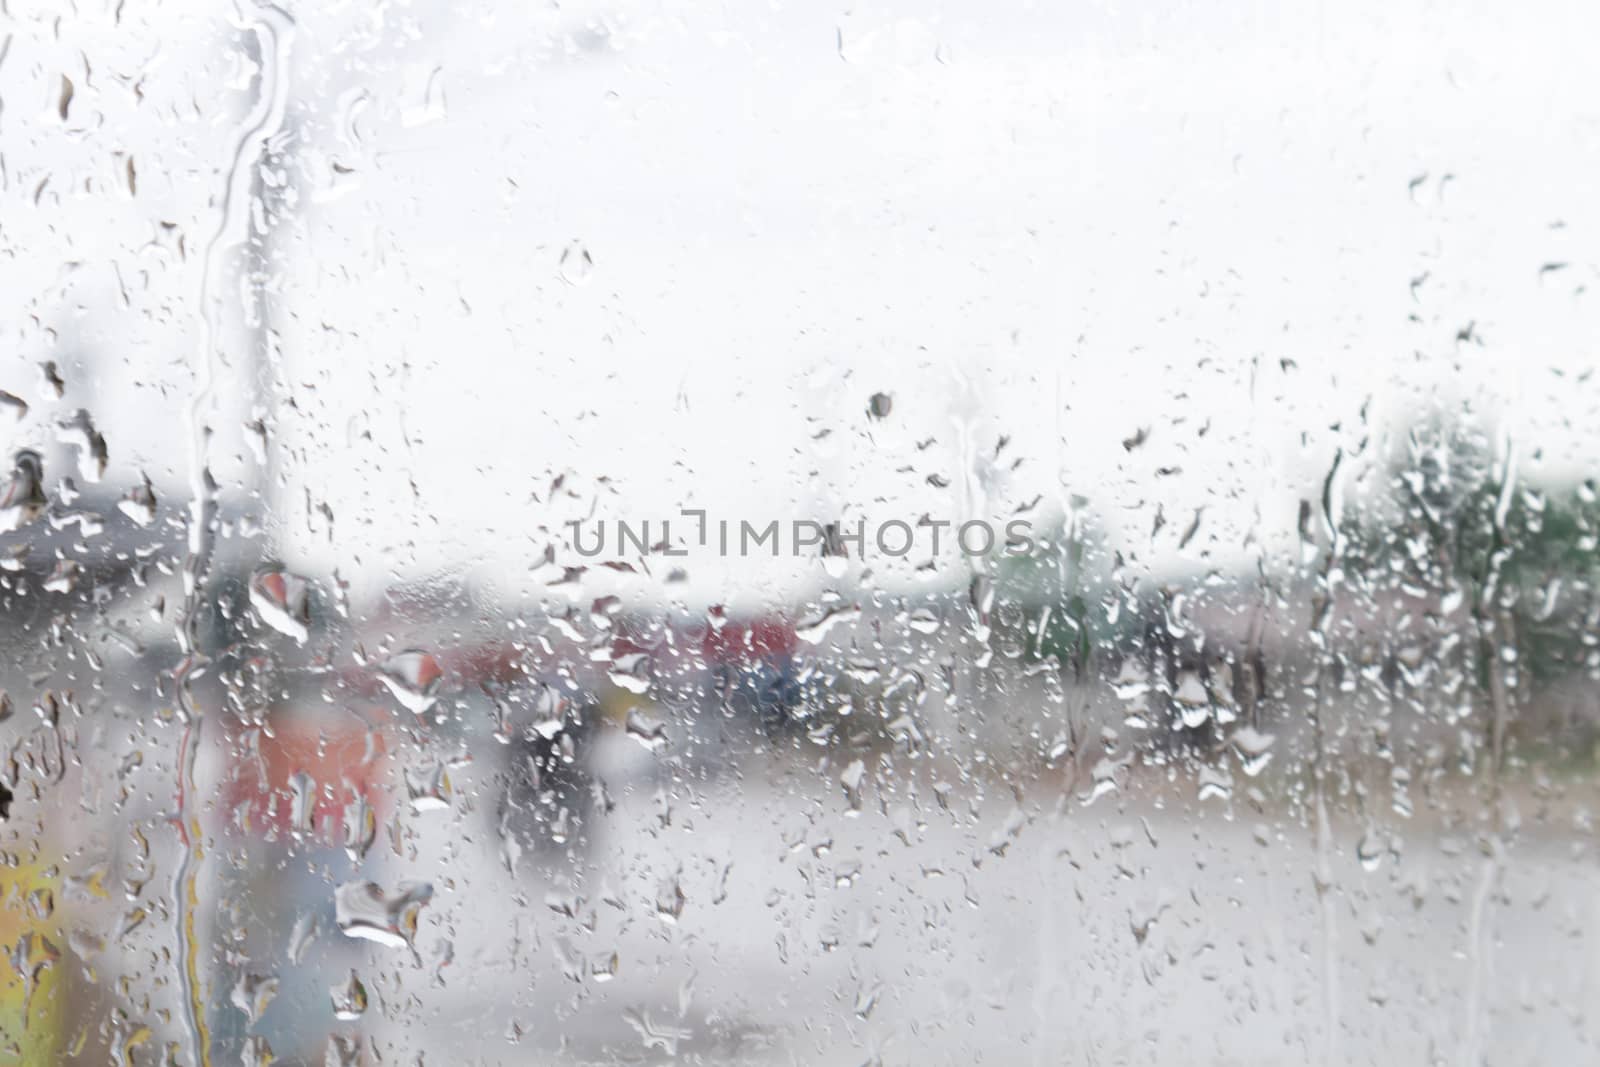 Rain drops on window glass with blur background by pt.pongsak@gmail.com